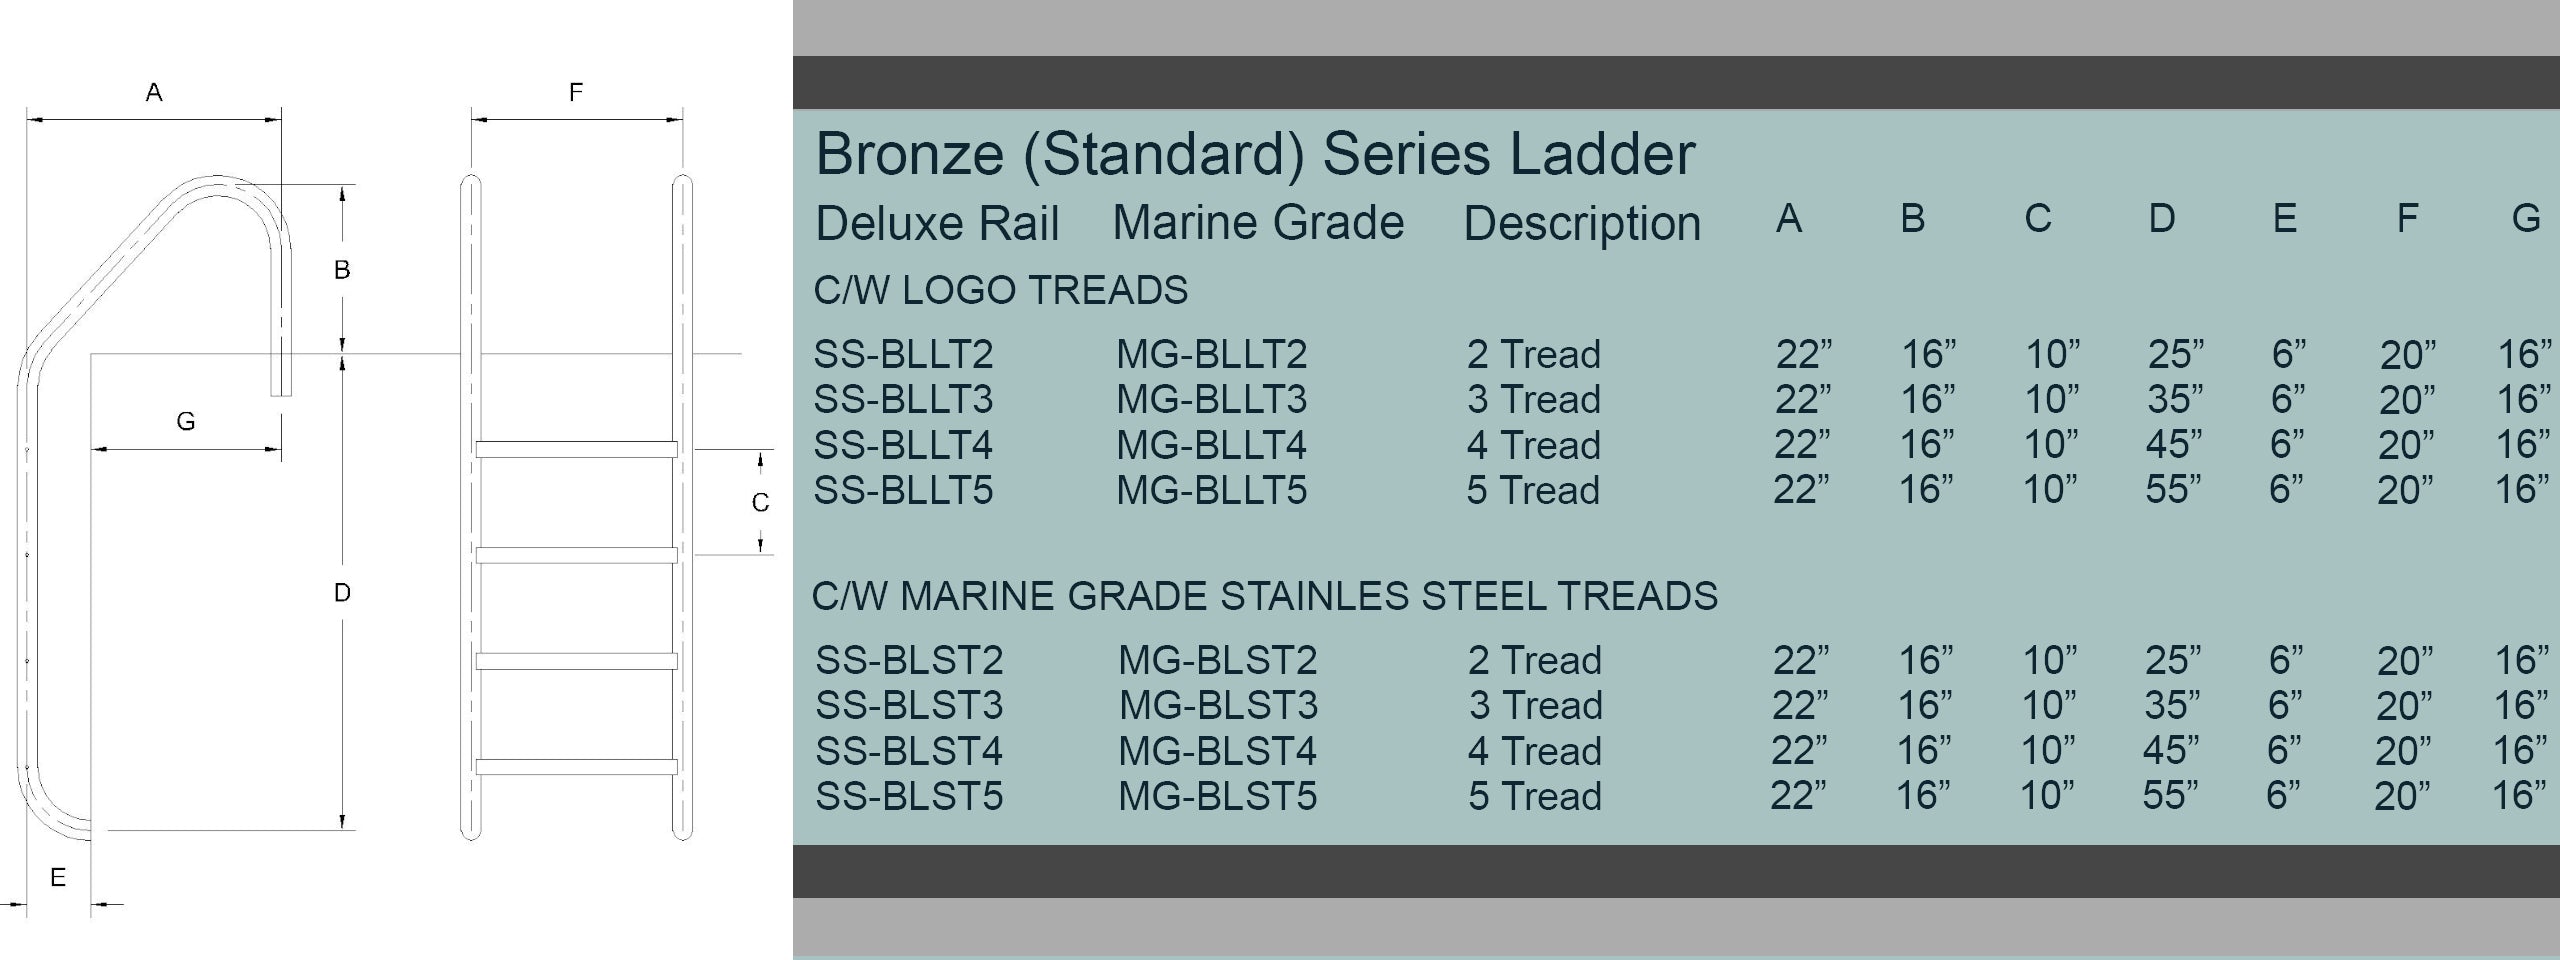 Marine Grade stainless steel ladder (316L) - 3 steps